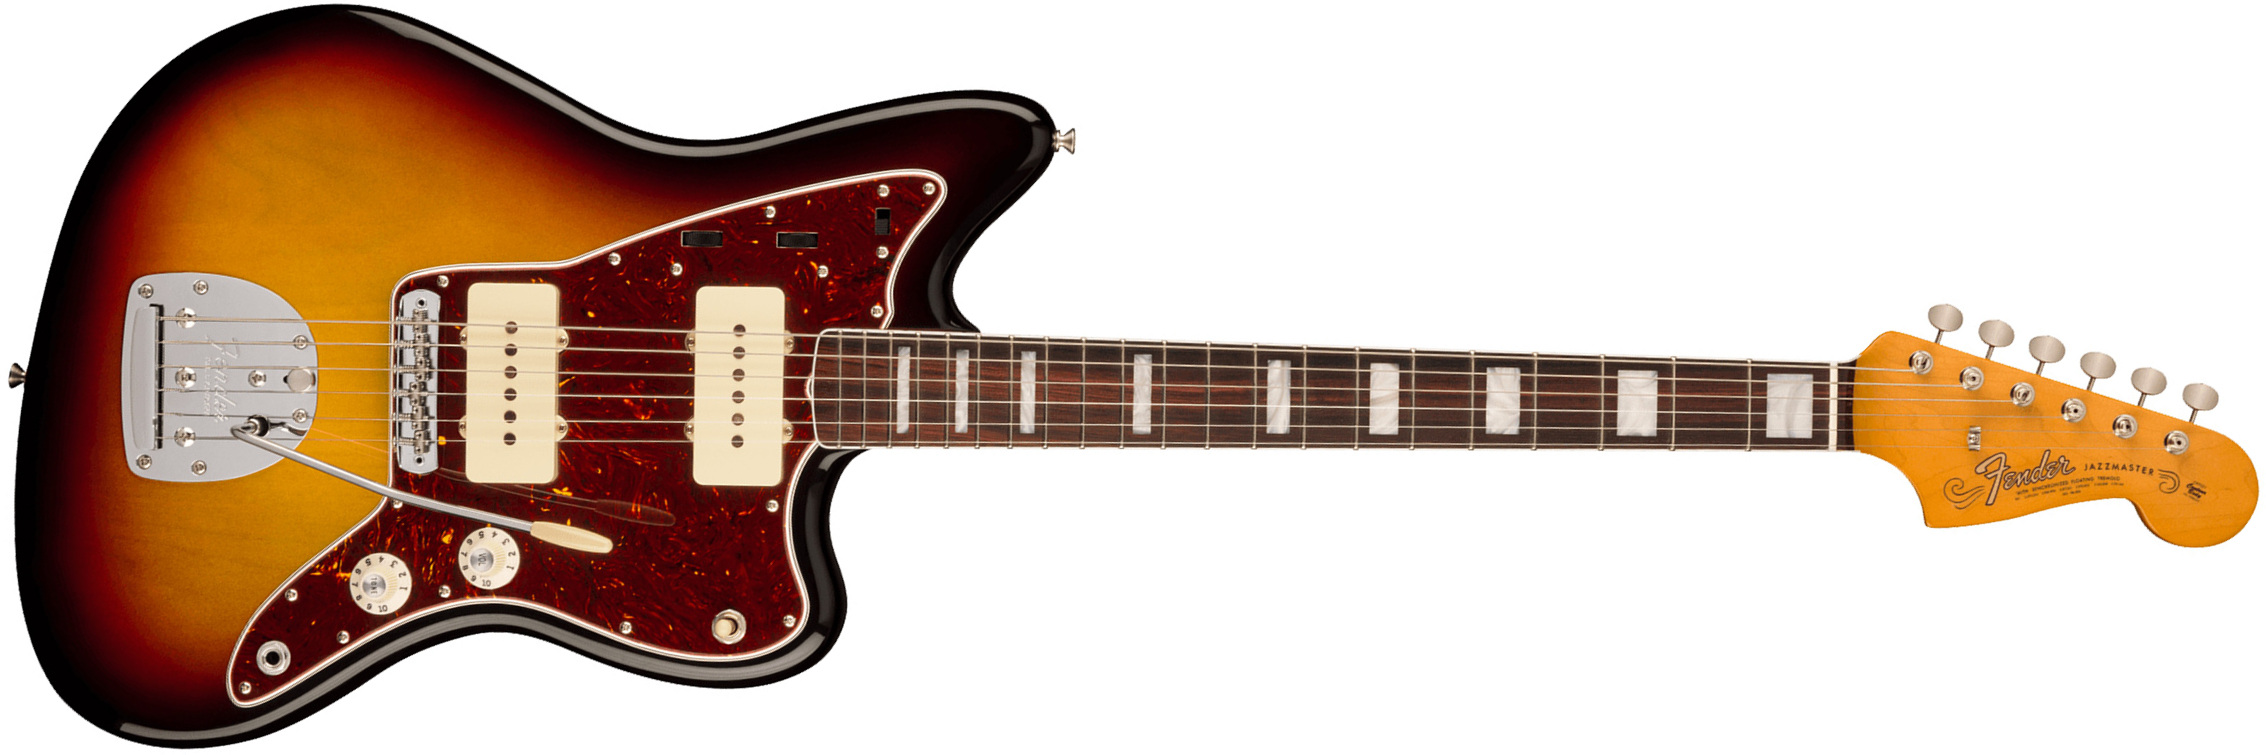 Fender Jazzmaster 1966 American Vintage Ii Usa Sh Trem Rw - 3-color Sunburst - Guitarra electrica retro rock - Main picture